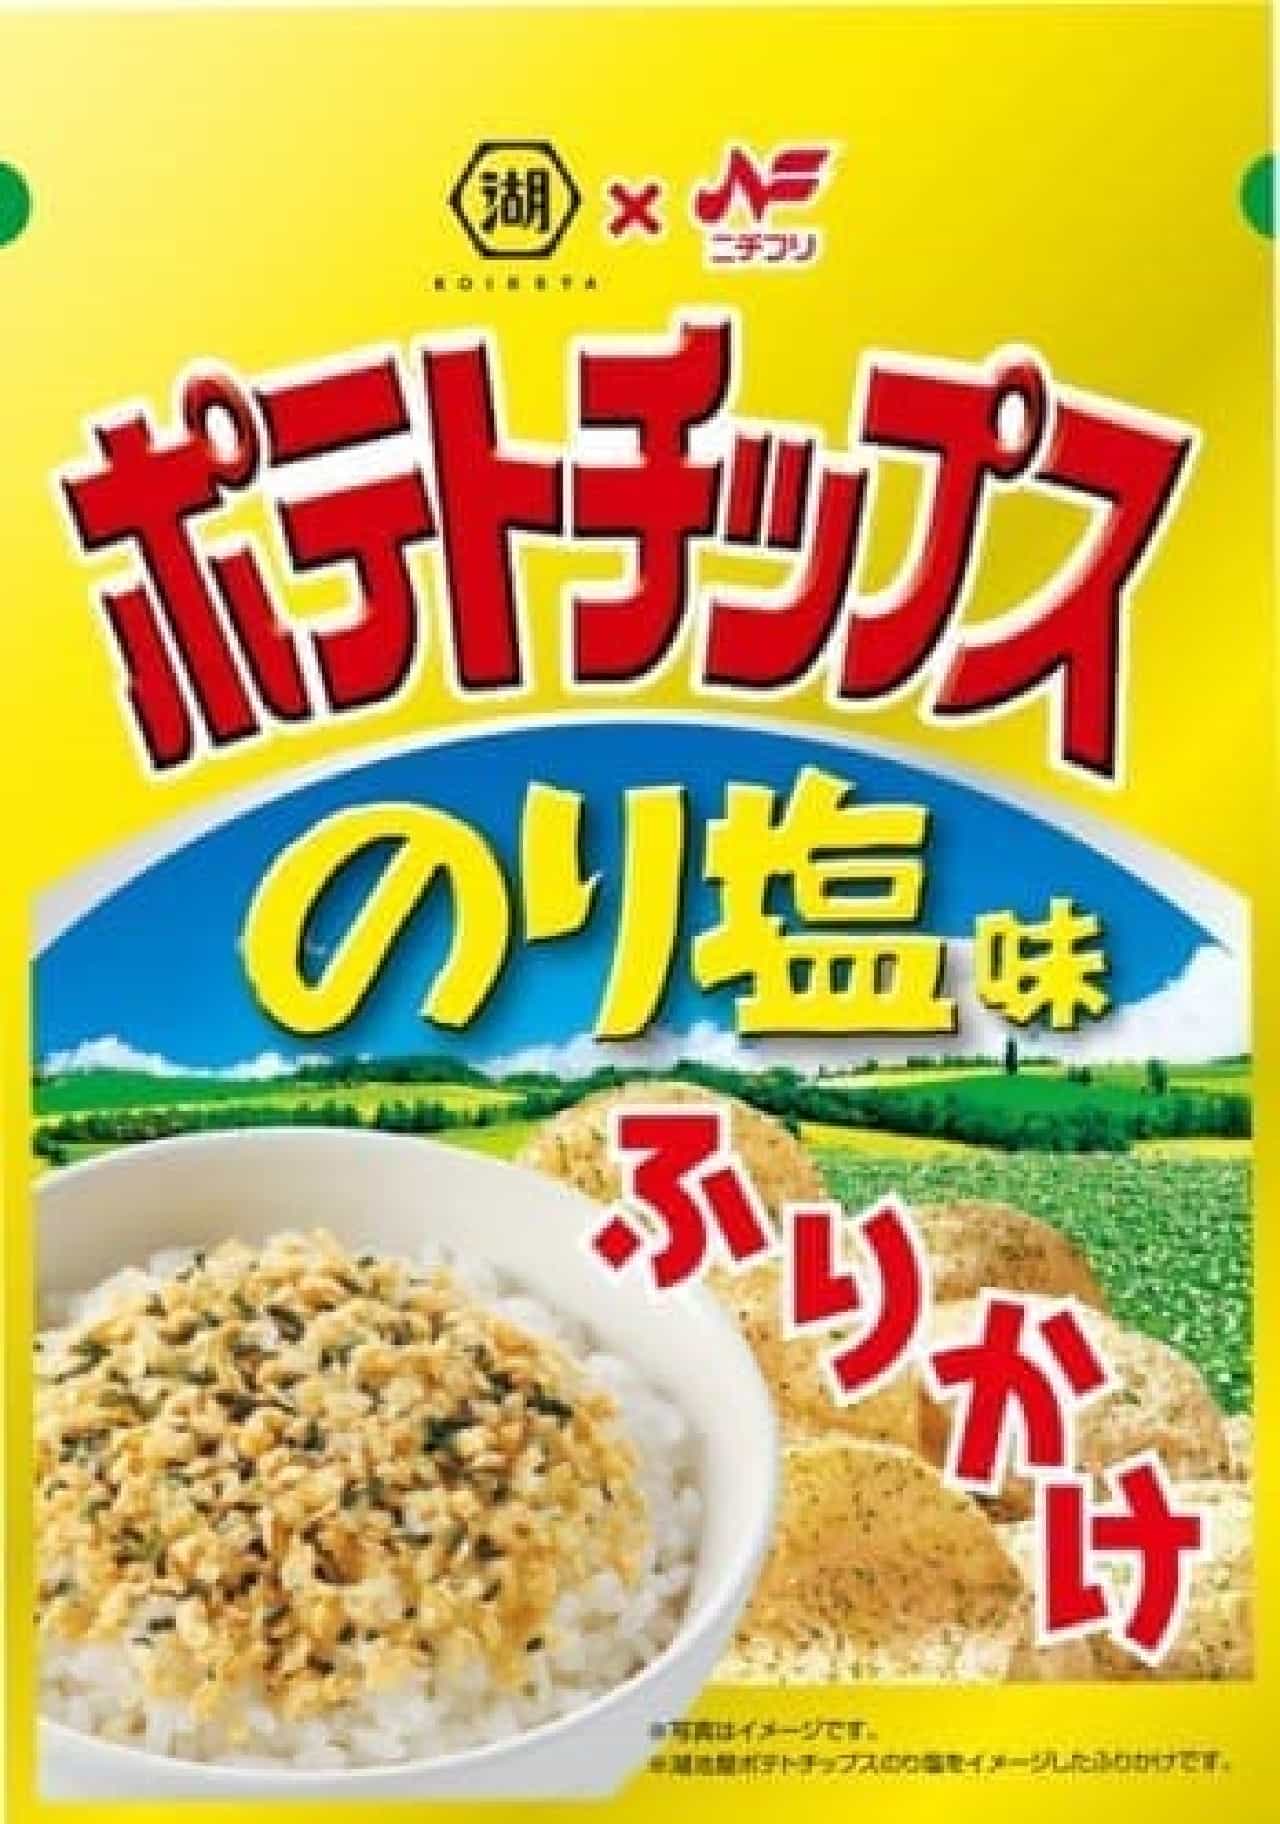 Koike-ya "Potato Chips Nori Salt" is now a "sprinkle" "Potato Chips Nori Salt Sprinkle"